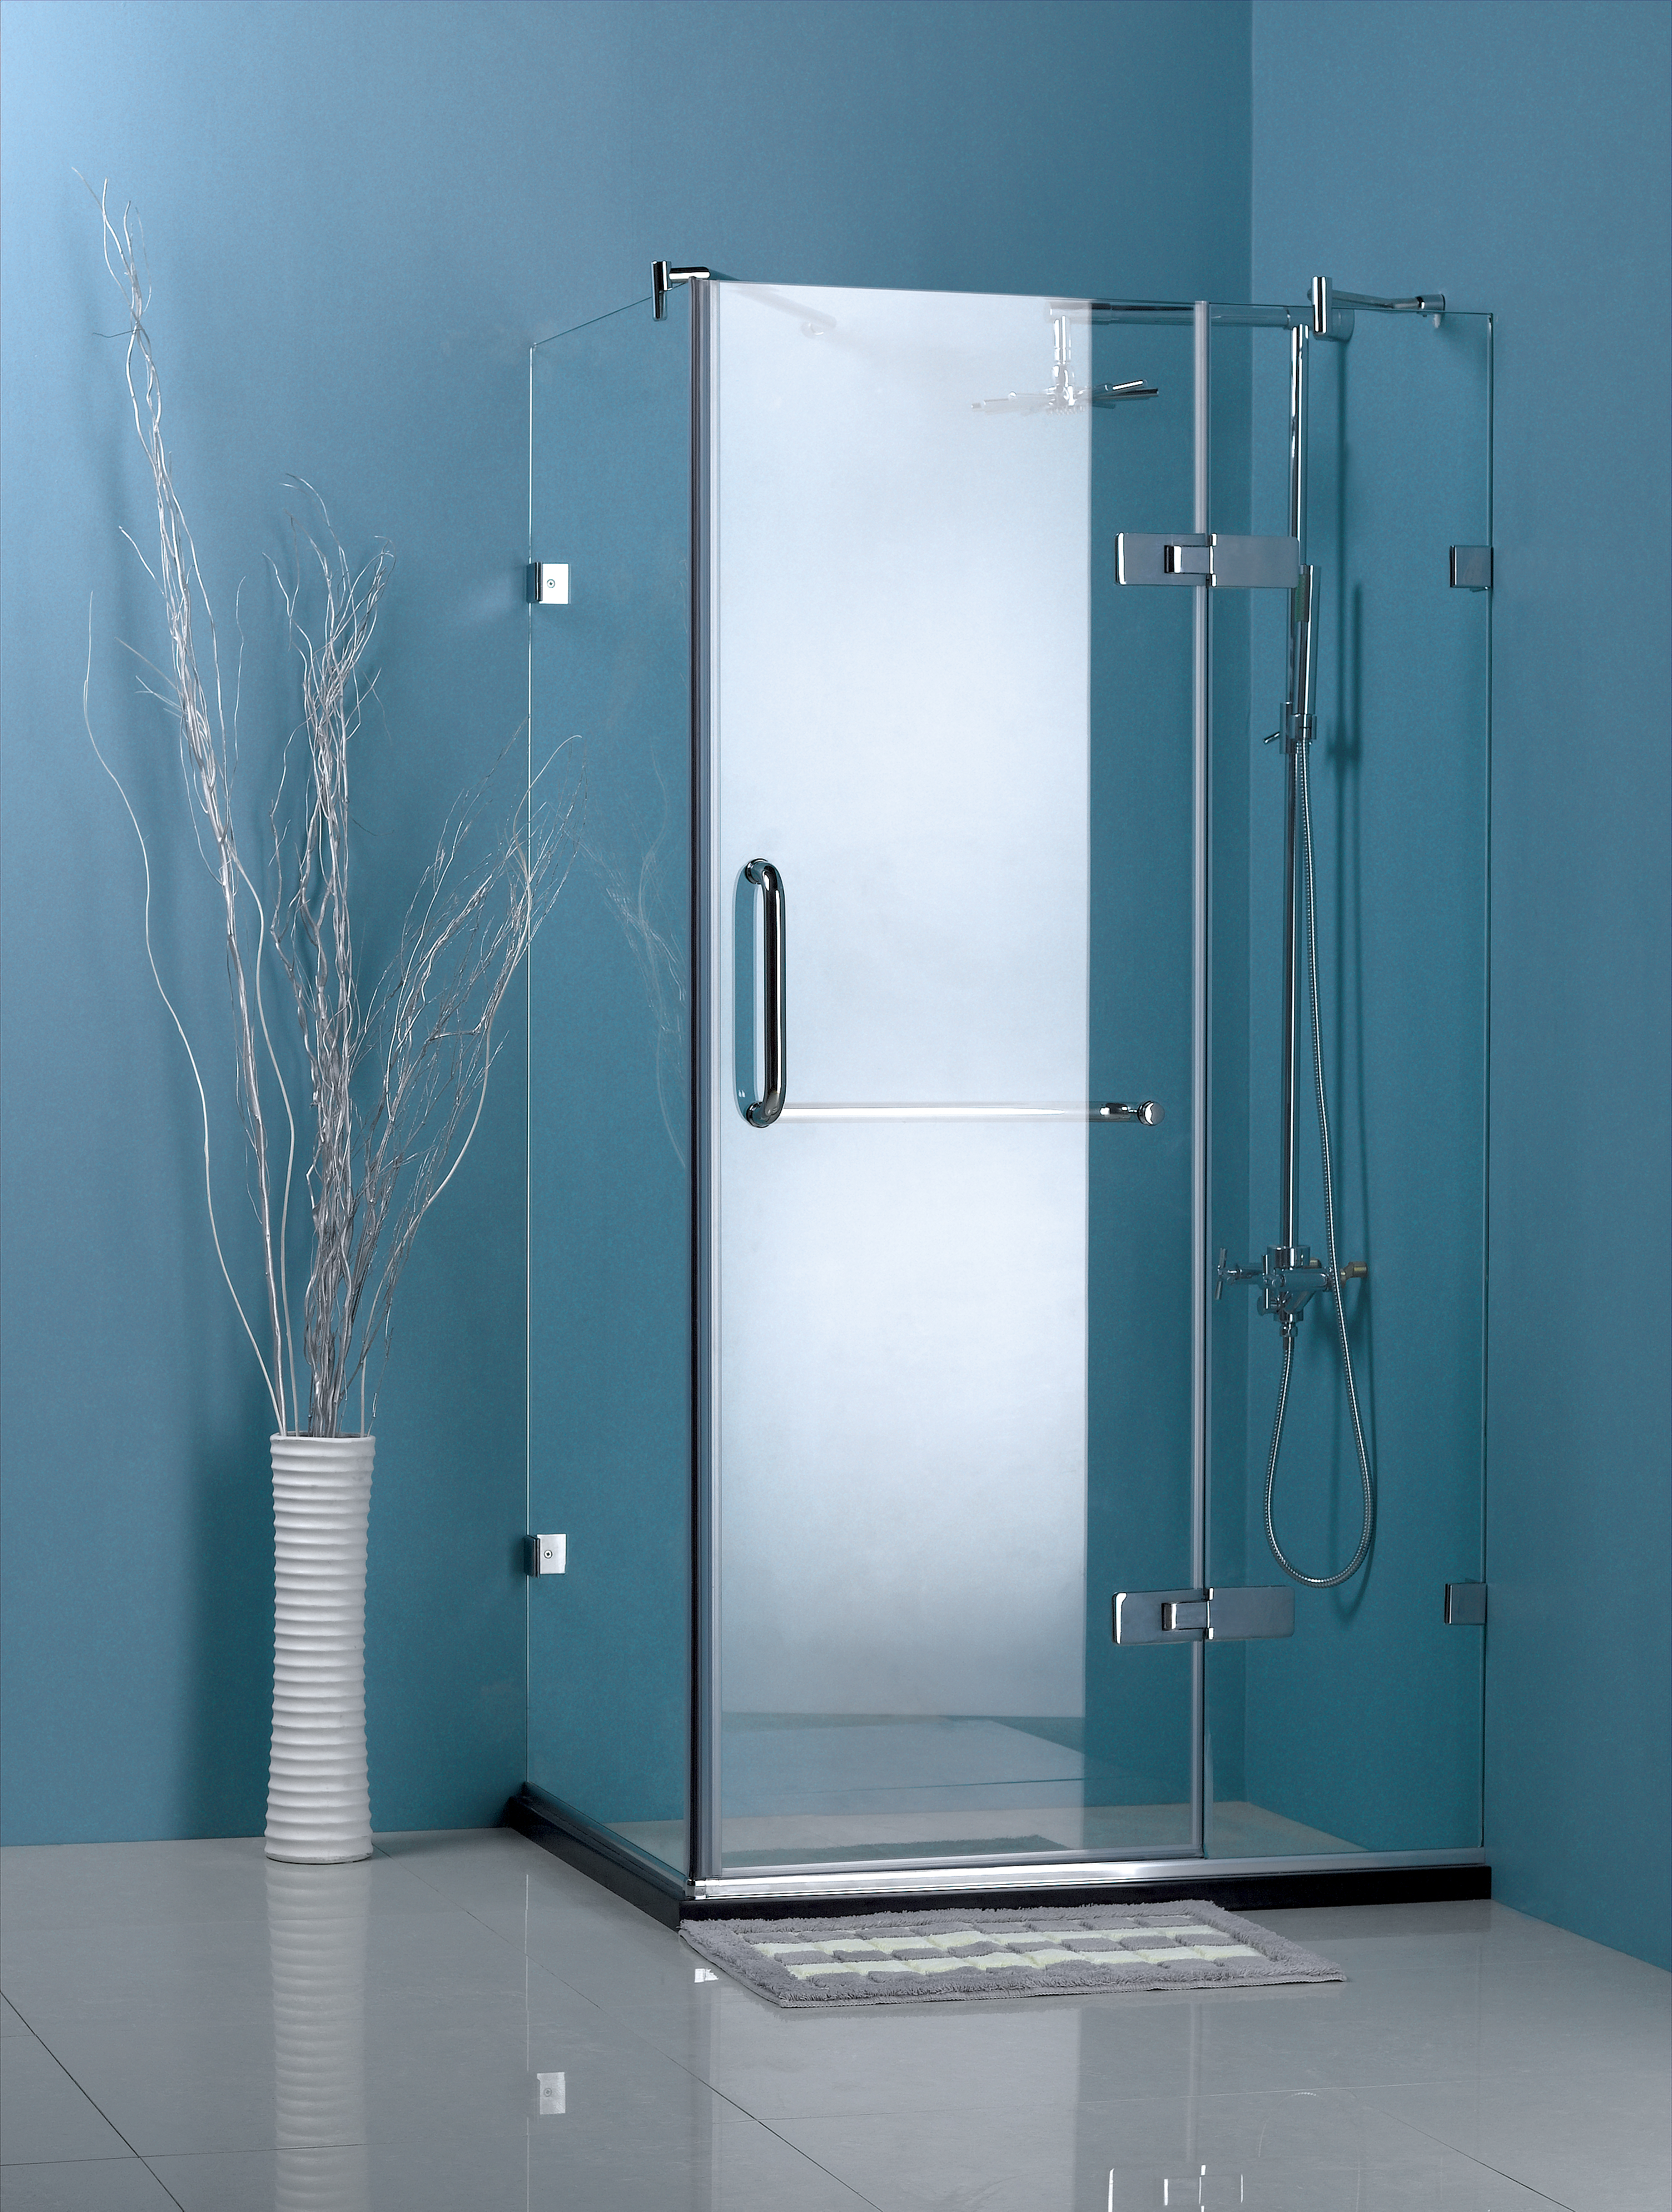 Hardware Component ng Frameless Shower Room Glass Door